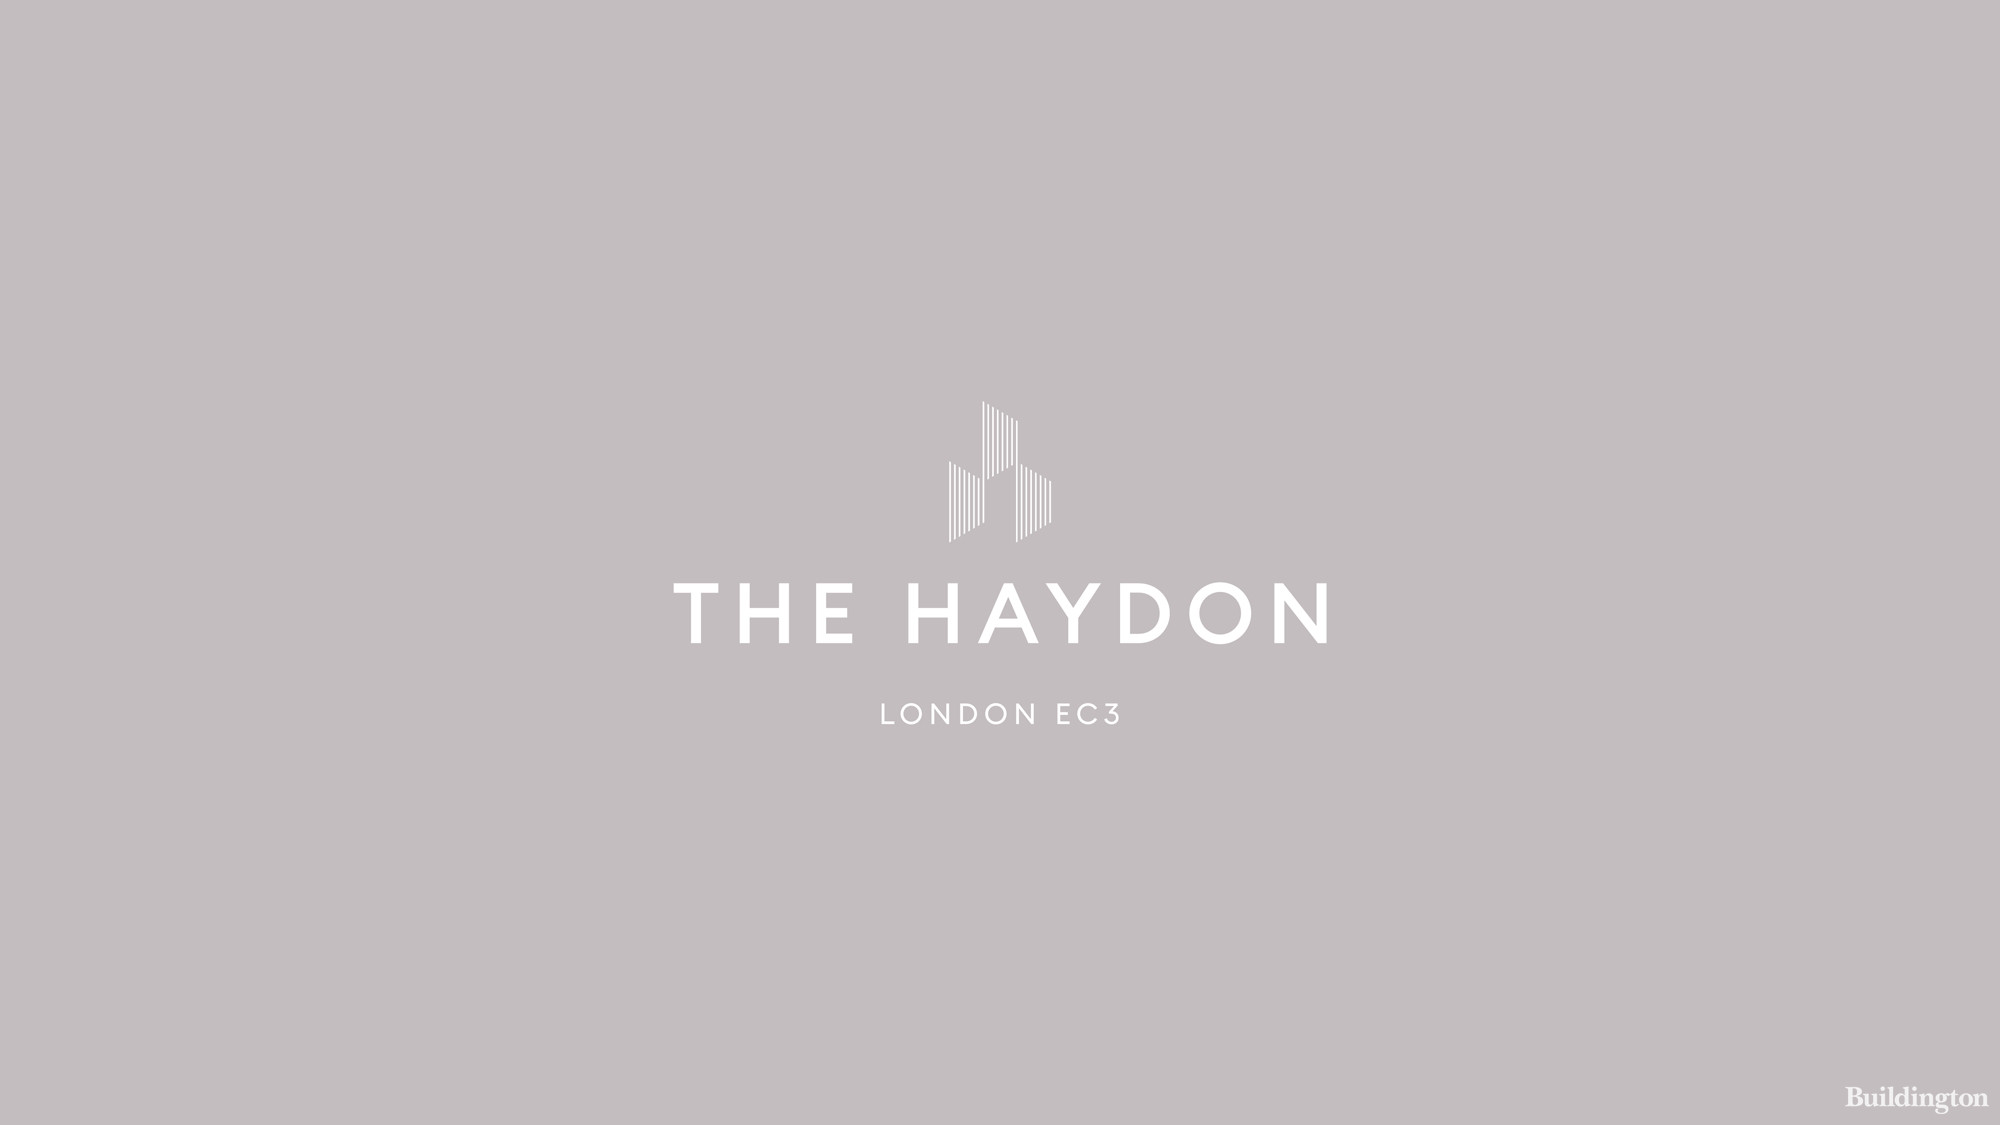 The Haydon development logo